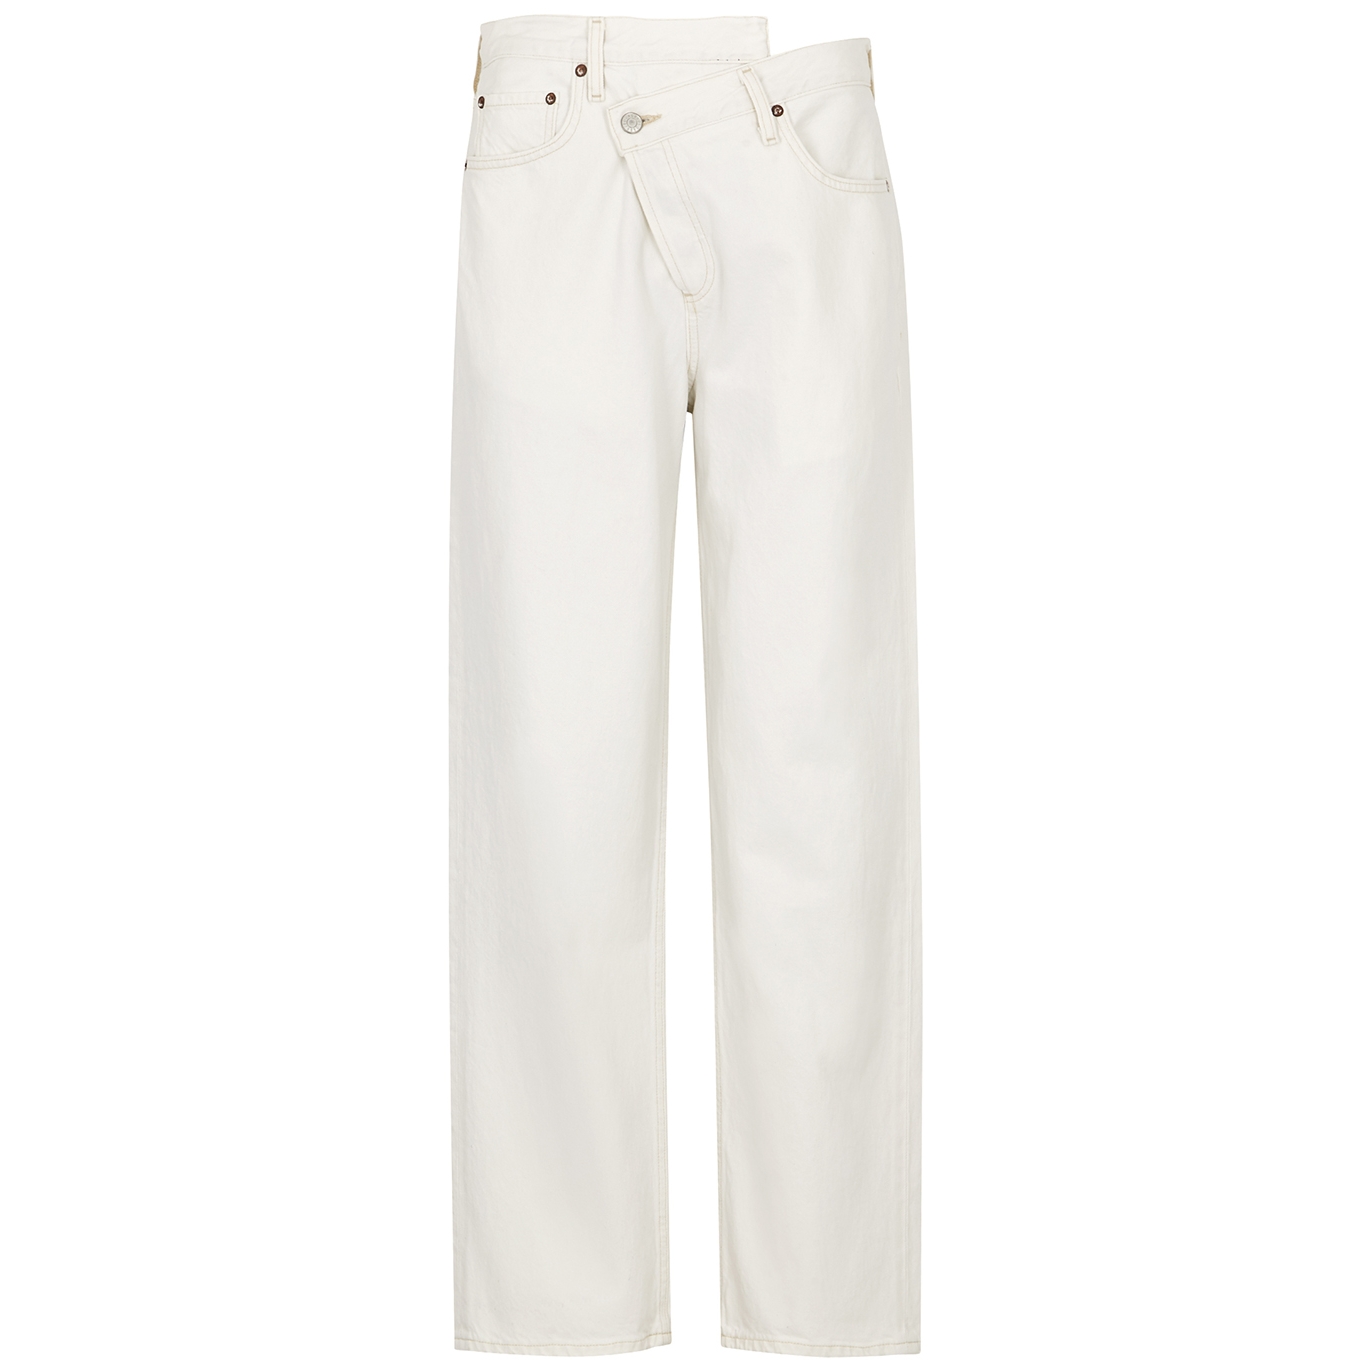 Agolde Criss Cross White Straight-leg Jeans - W24